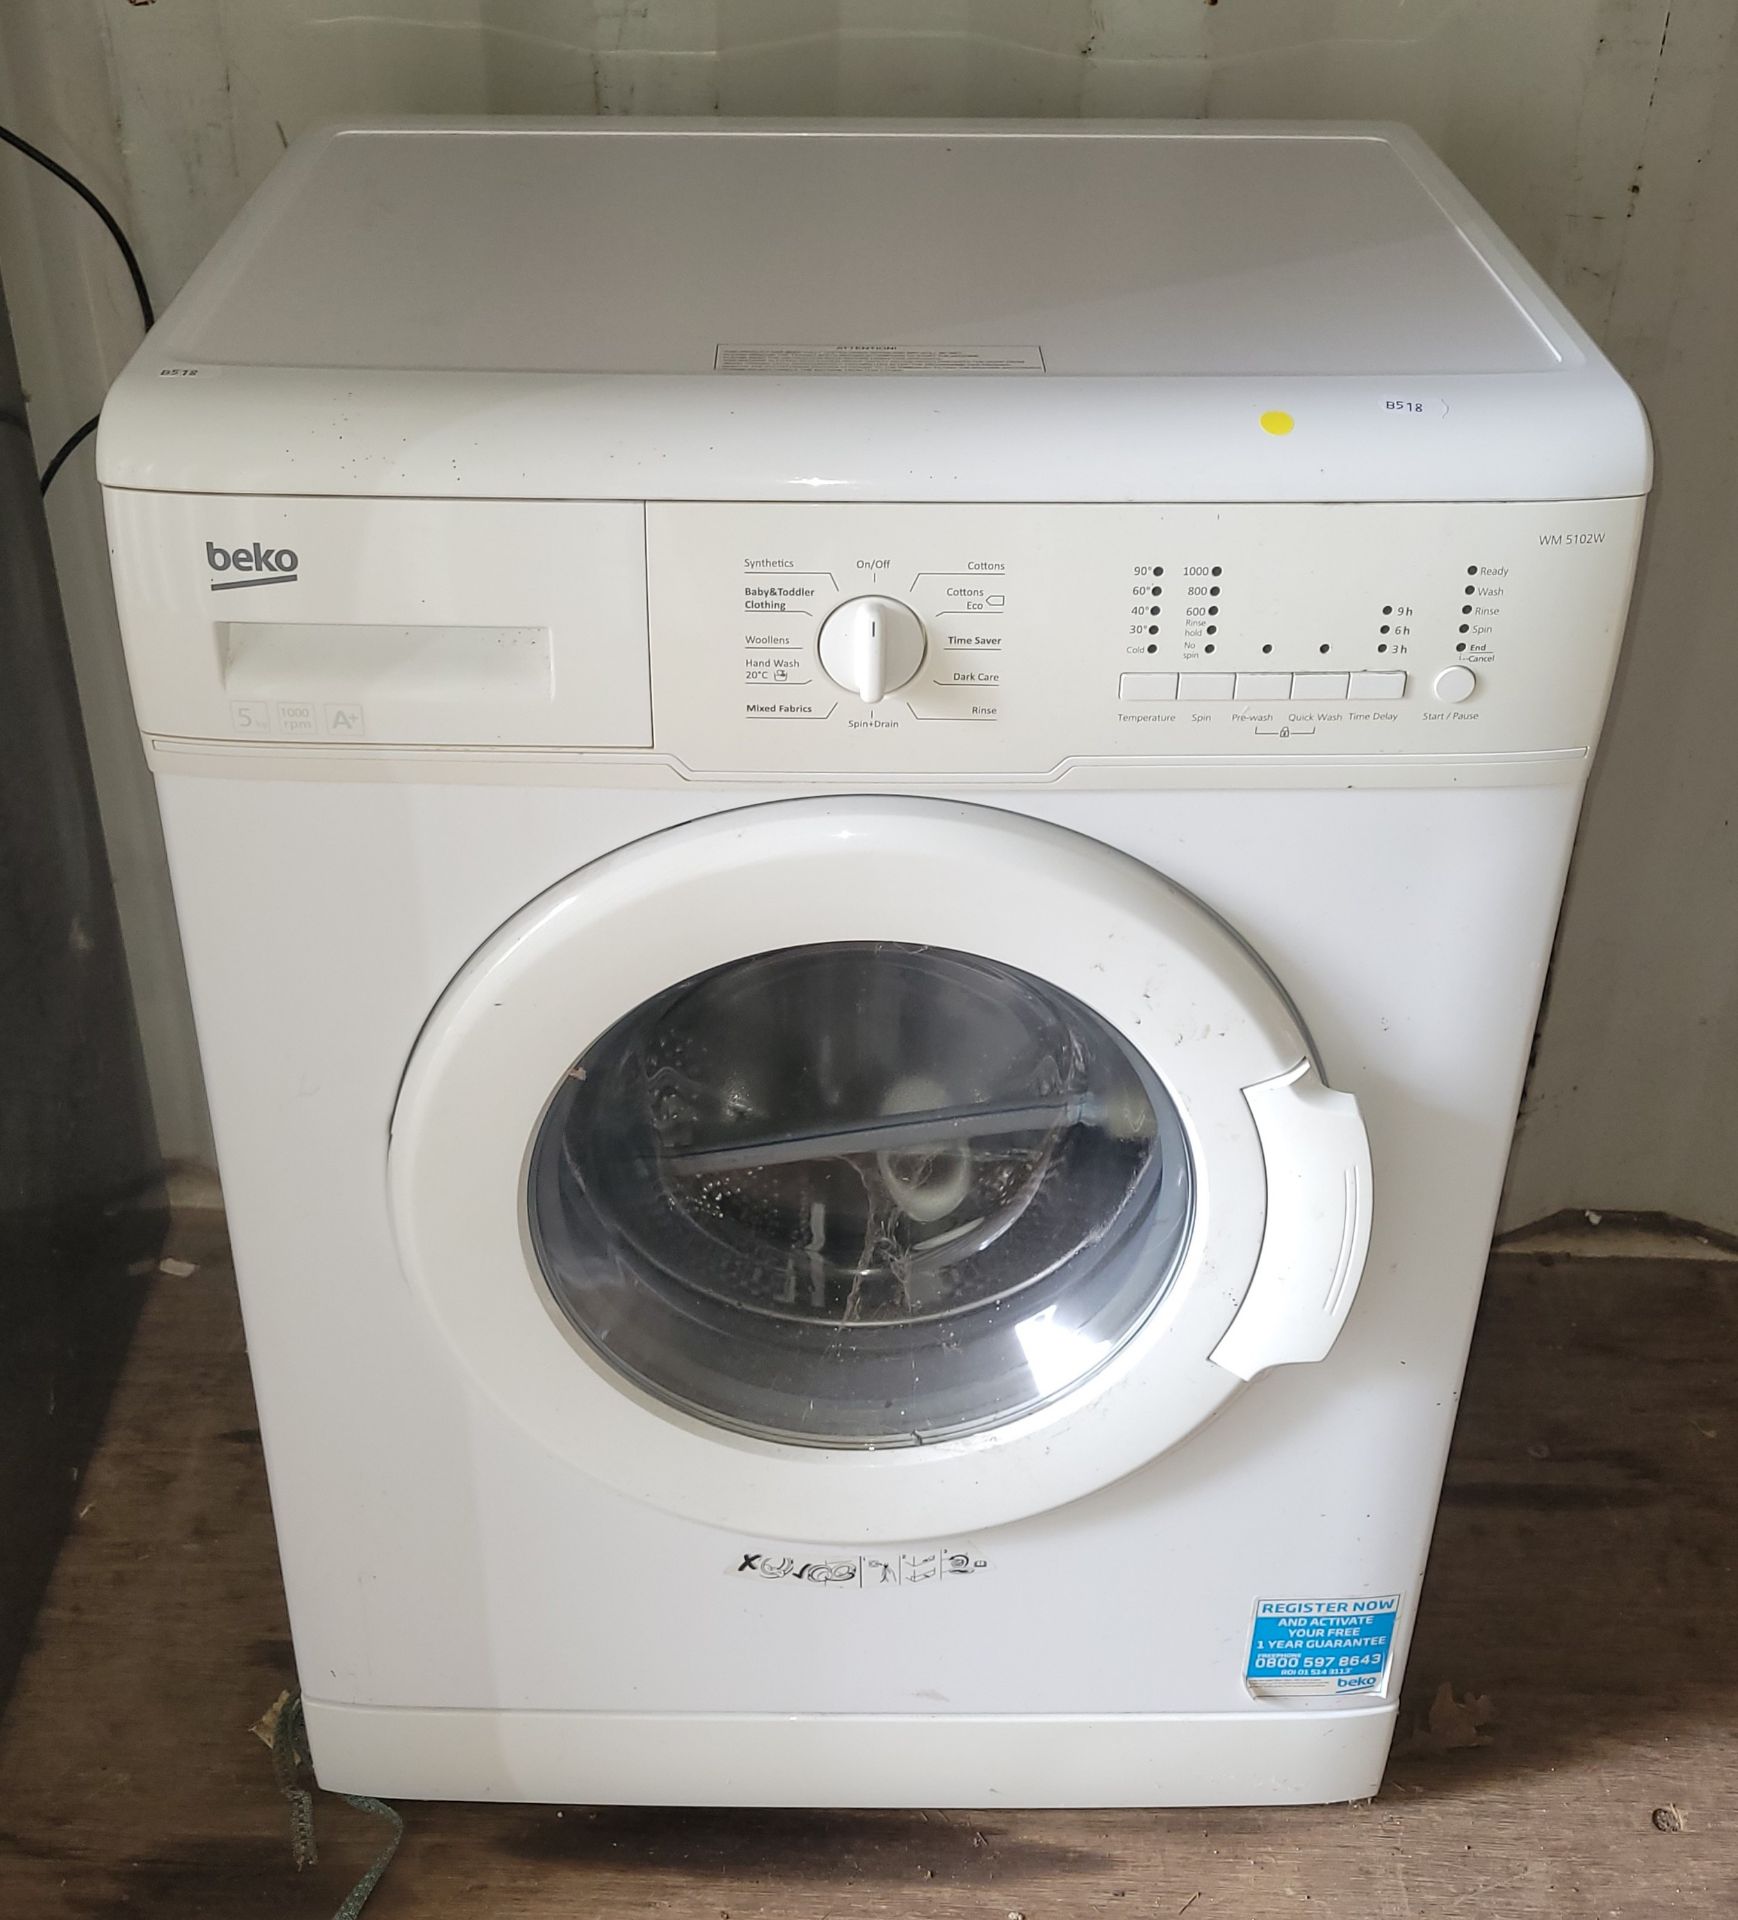 A Beko washing machine, model WM5102W. 60x84cm.